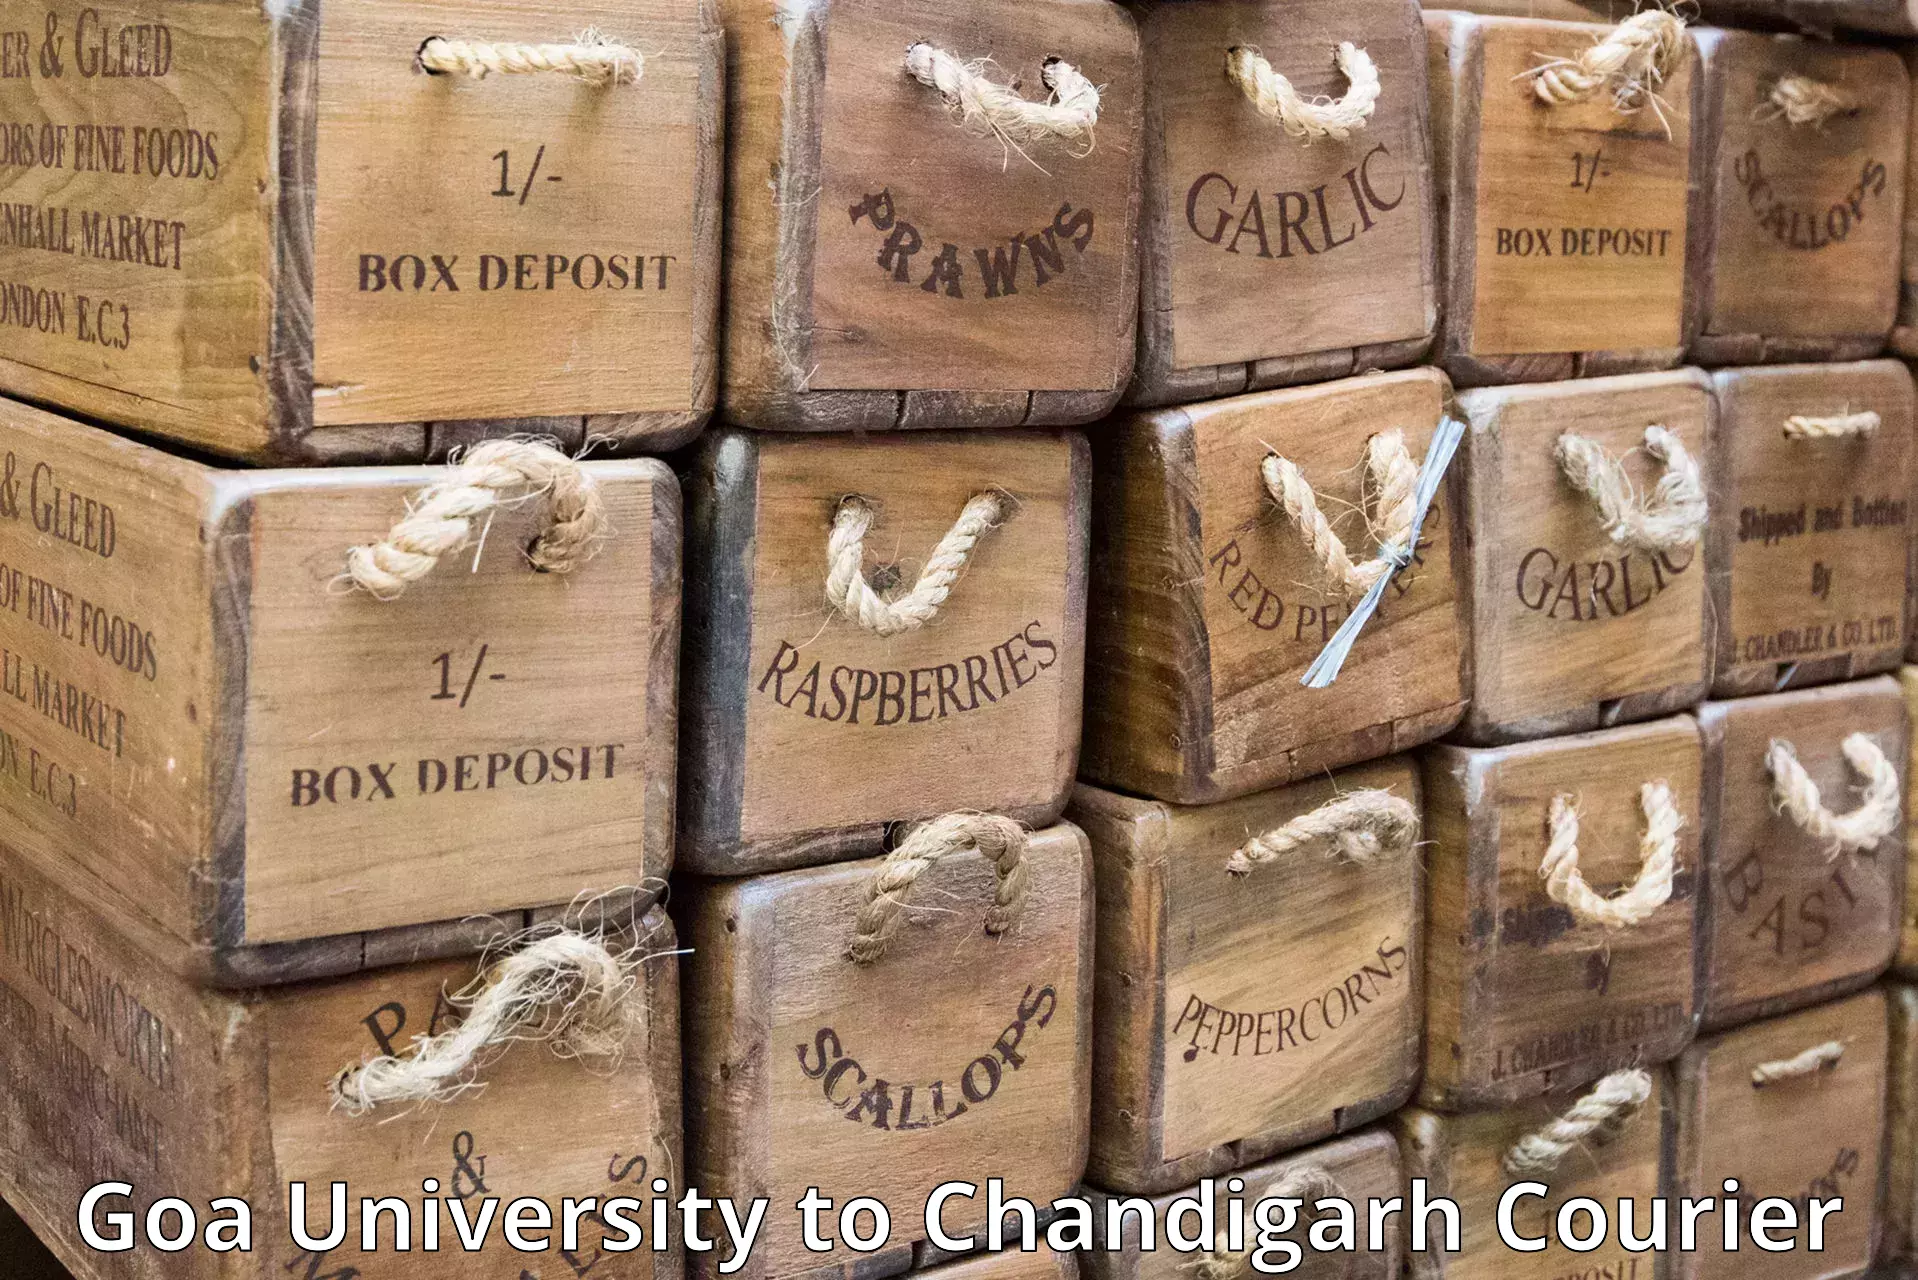 Courier service partnerships Goa University to Chandigarh